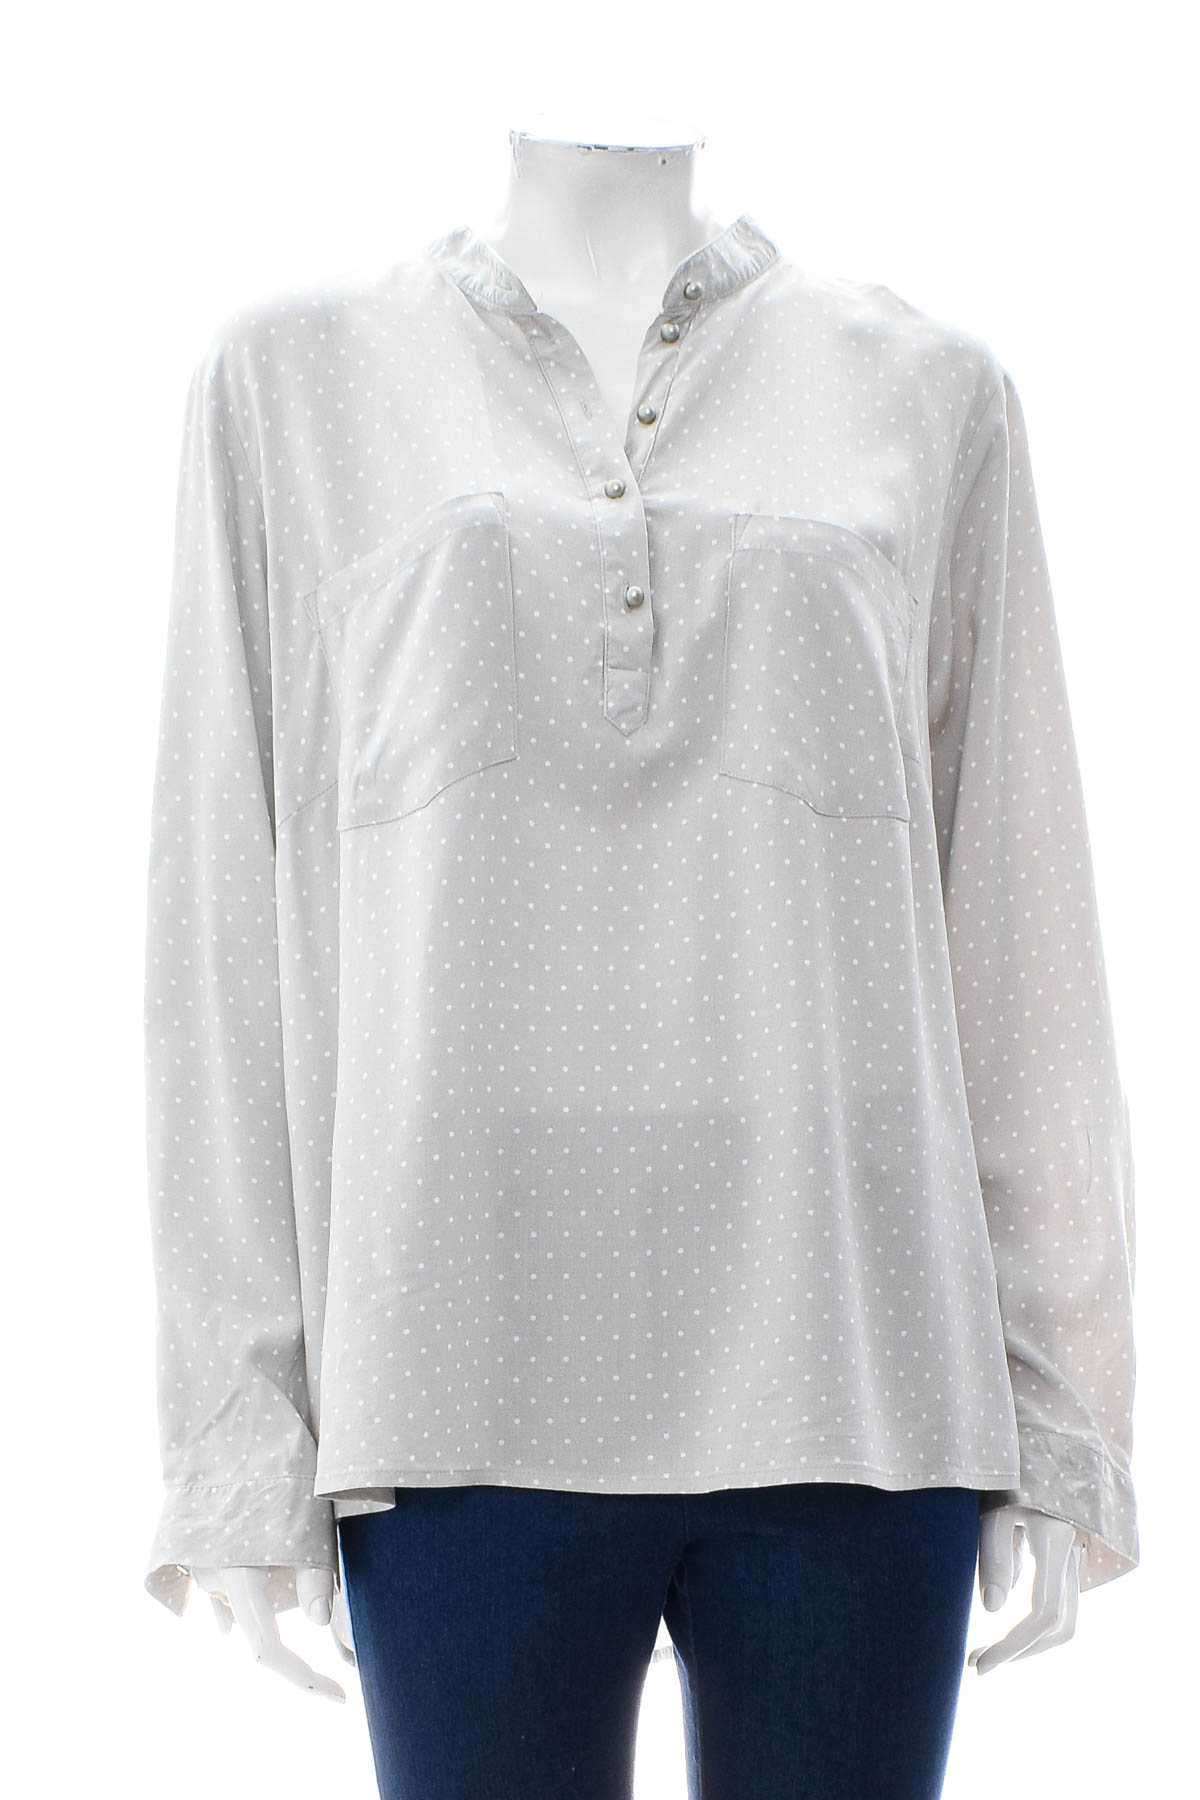 Women's shirt - Bpc selection bonprix collection - 0